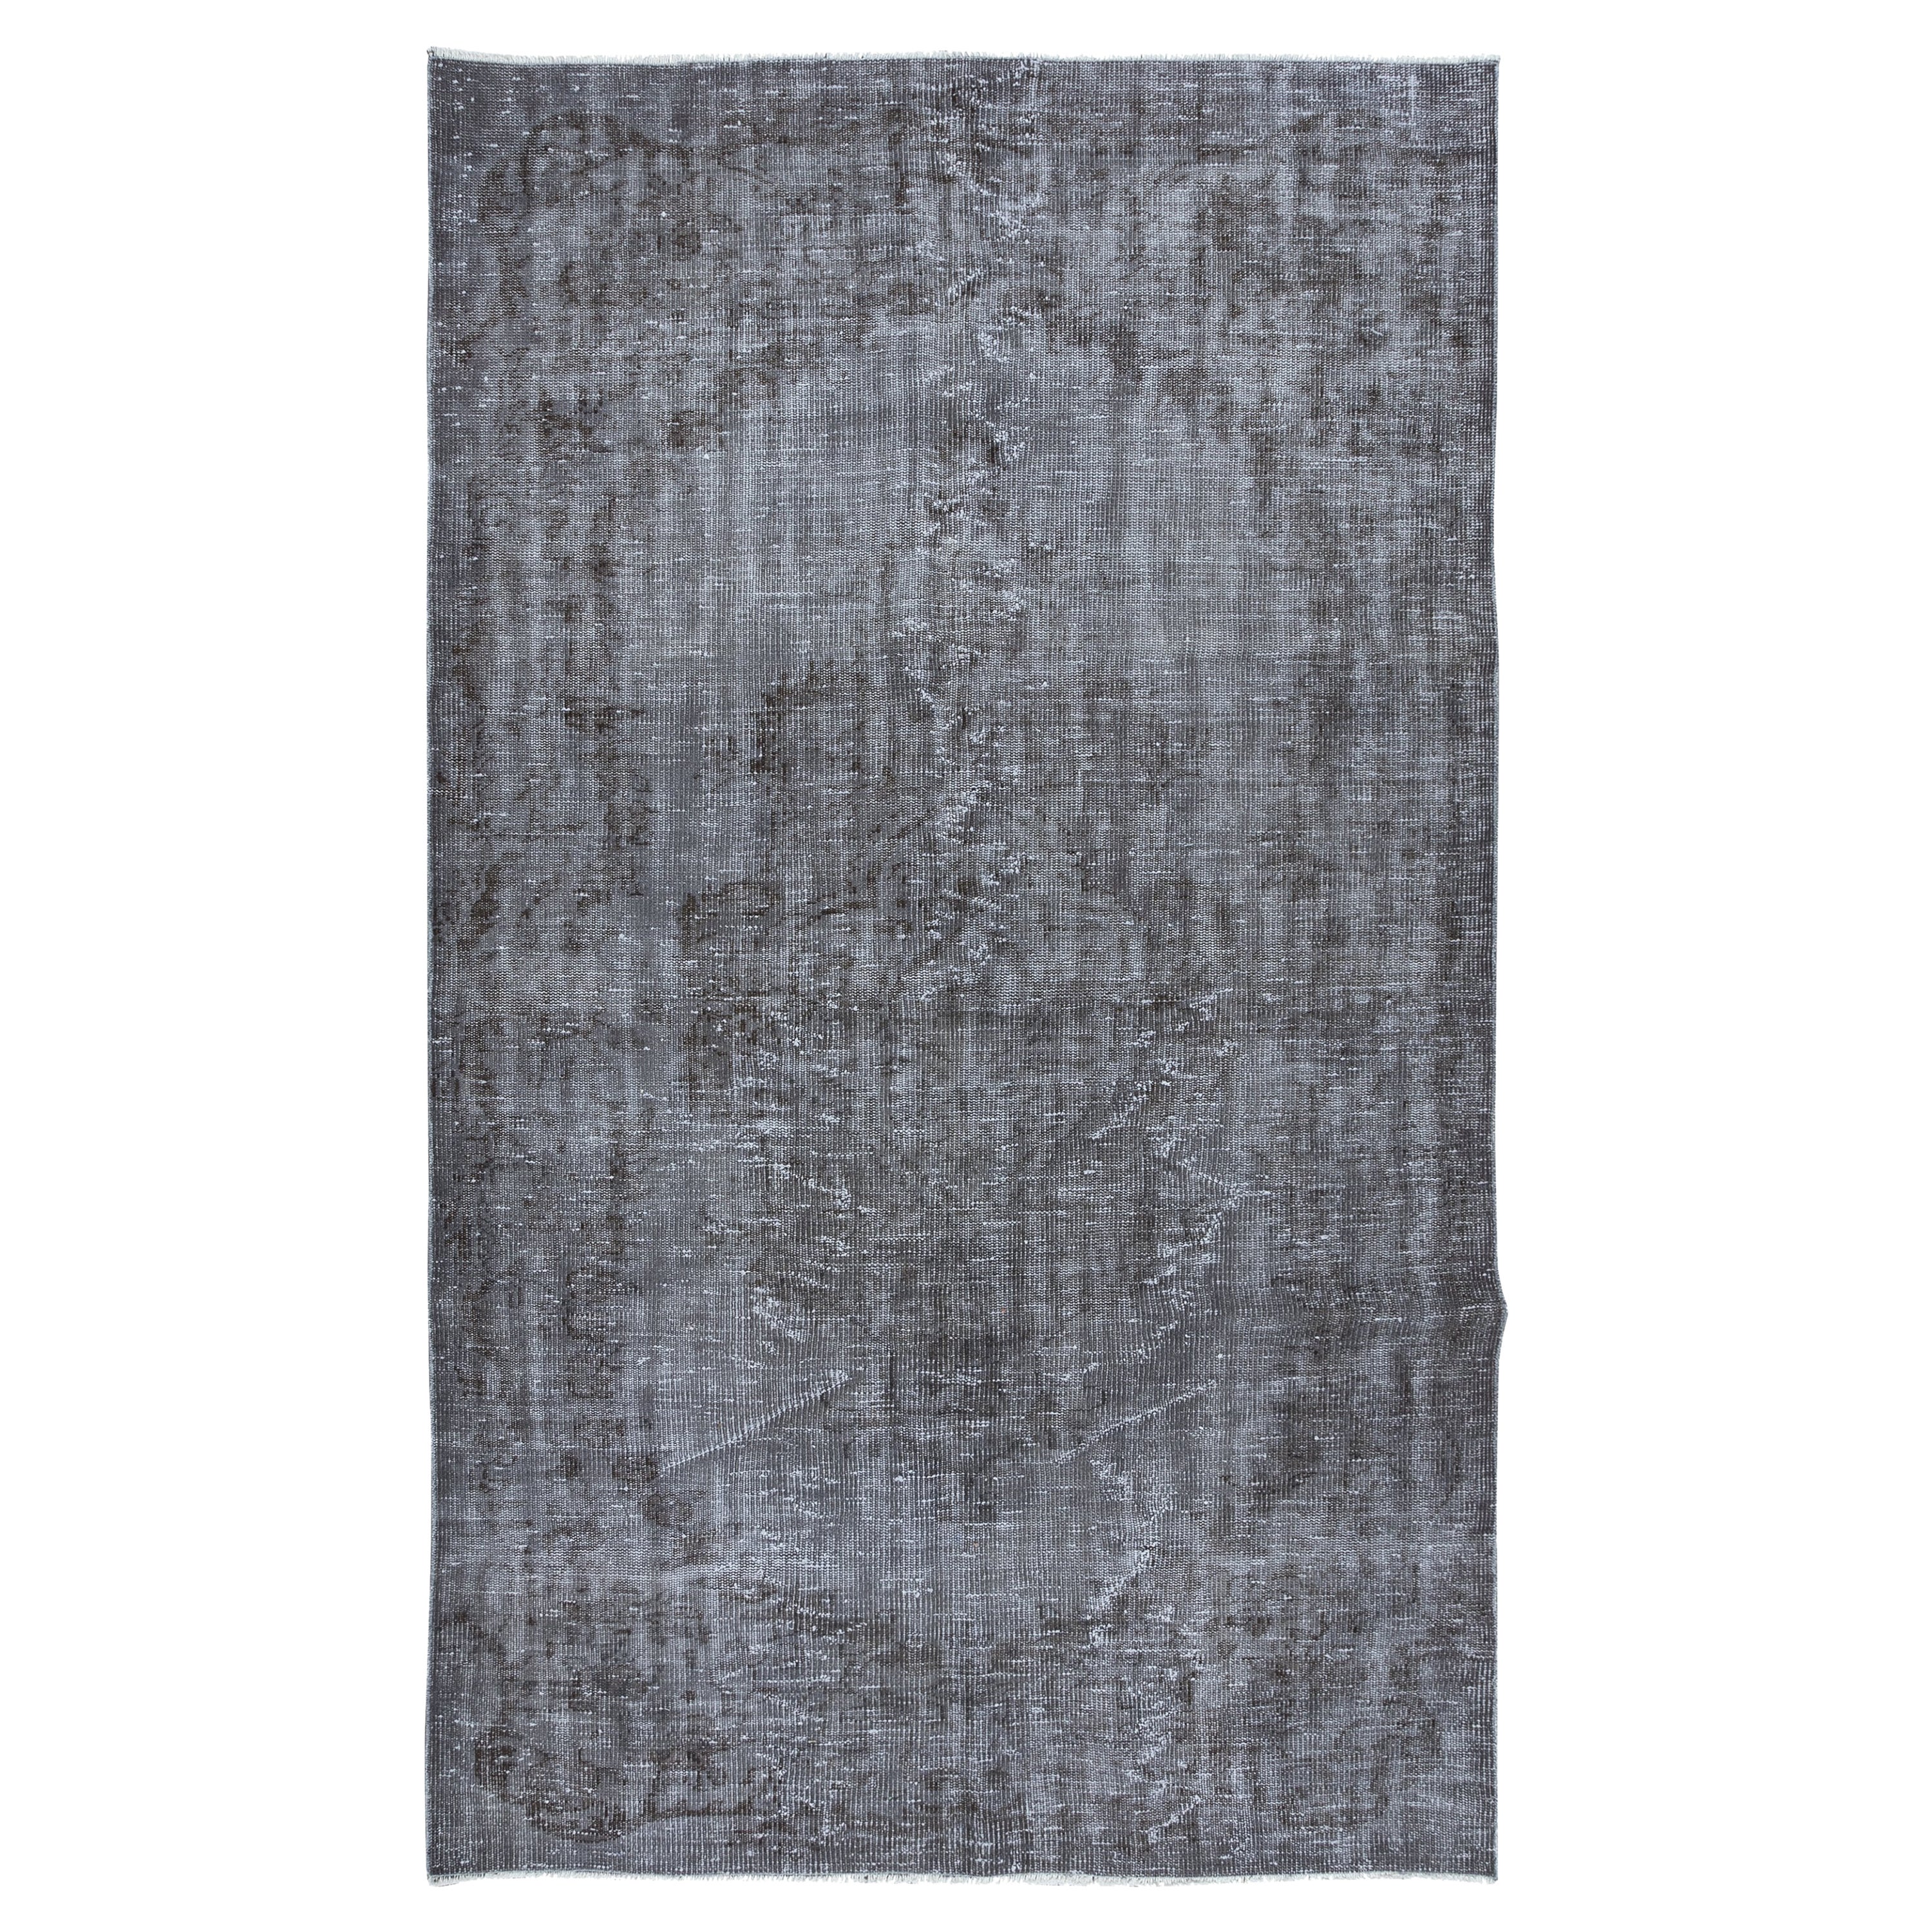 5x8.6 Ft Gray Handmade Area Rug, Decorative Turkish Carpet, Floor Covering